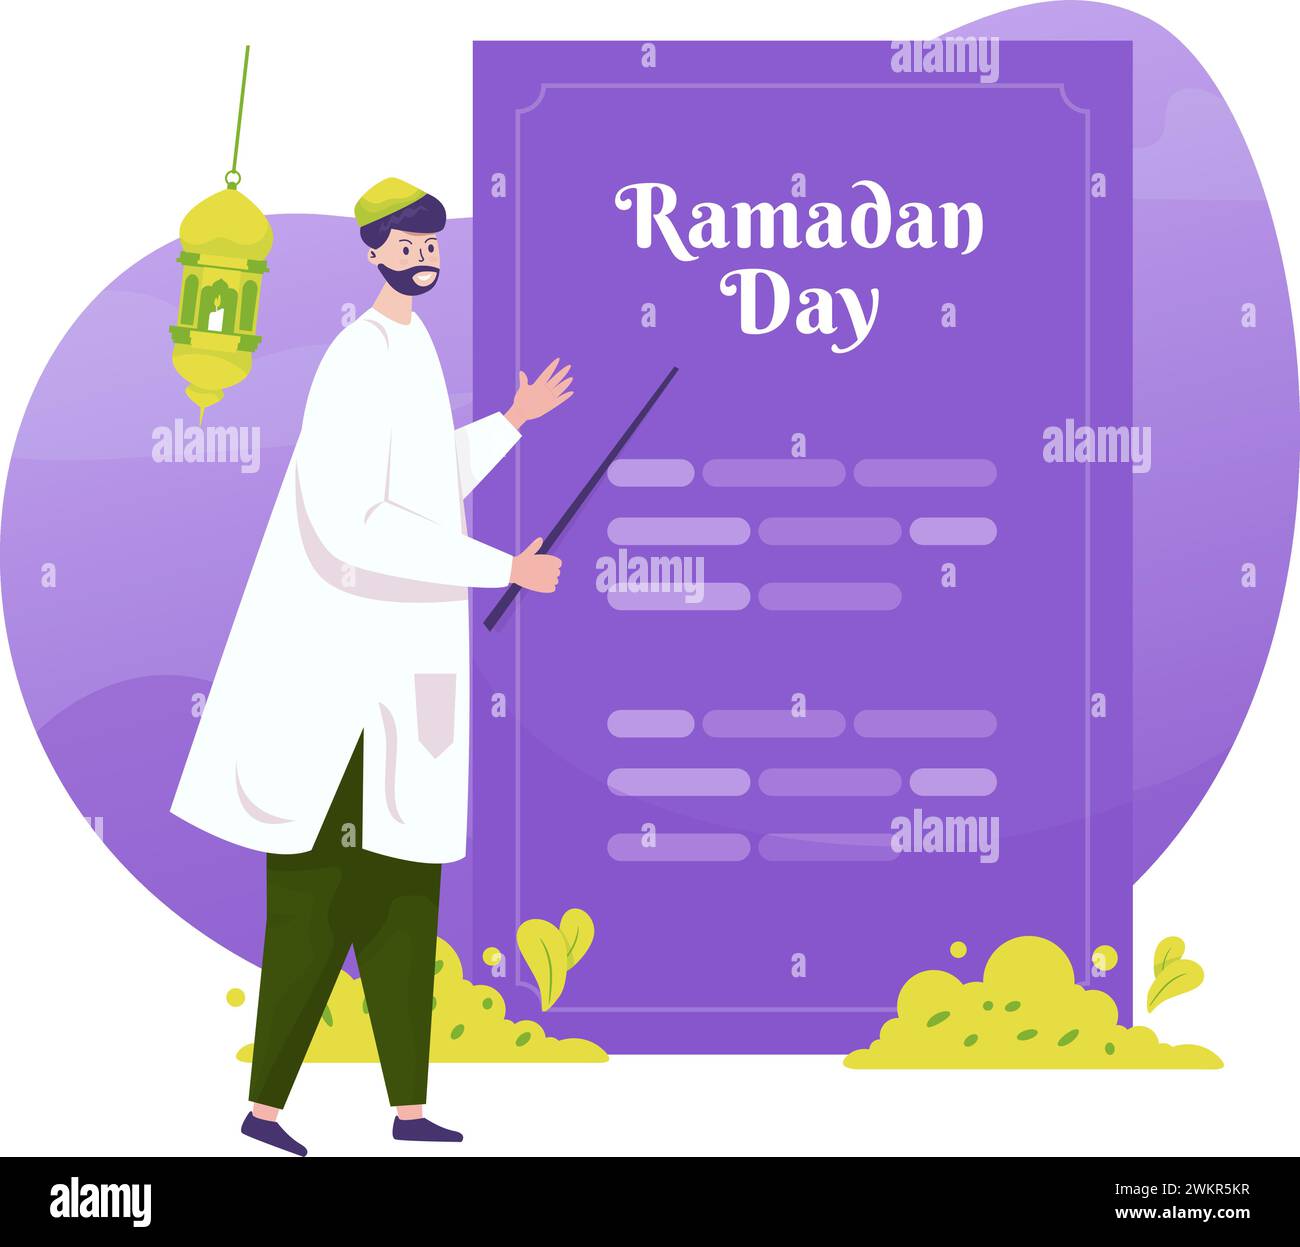 Welcome ramadan kareem greeting illustration Stock Vector